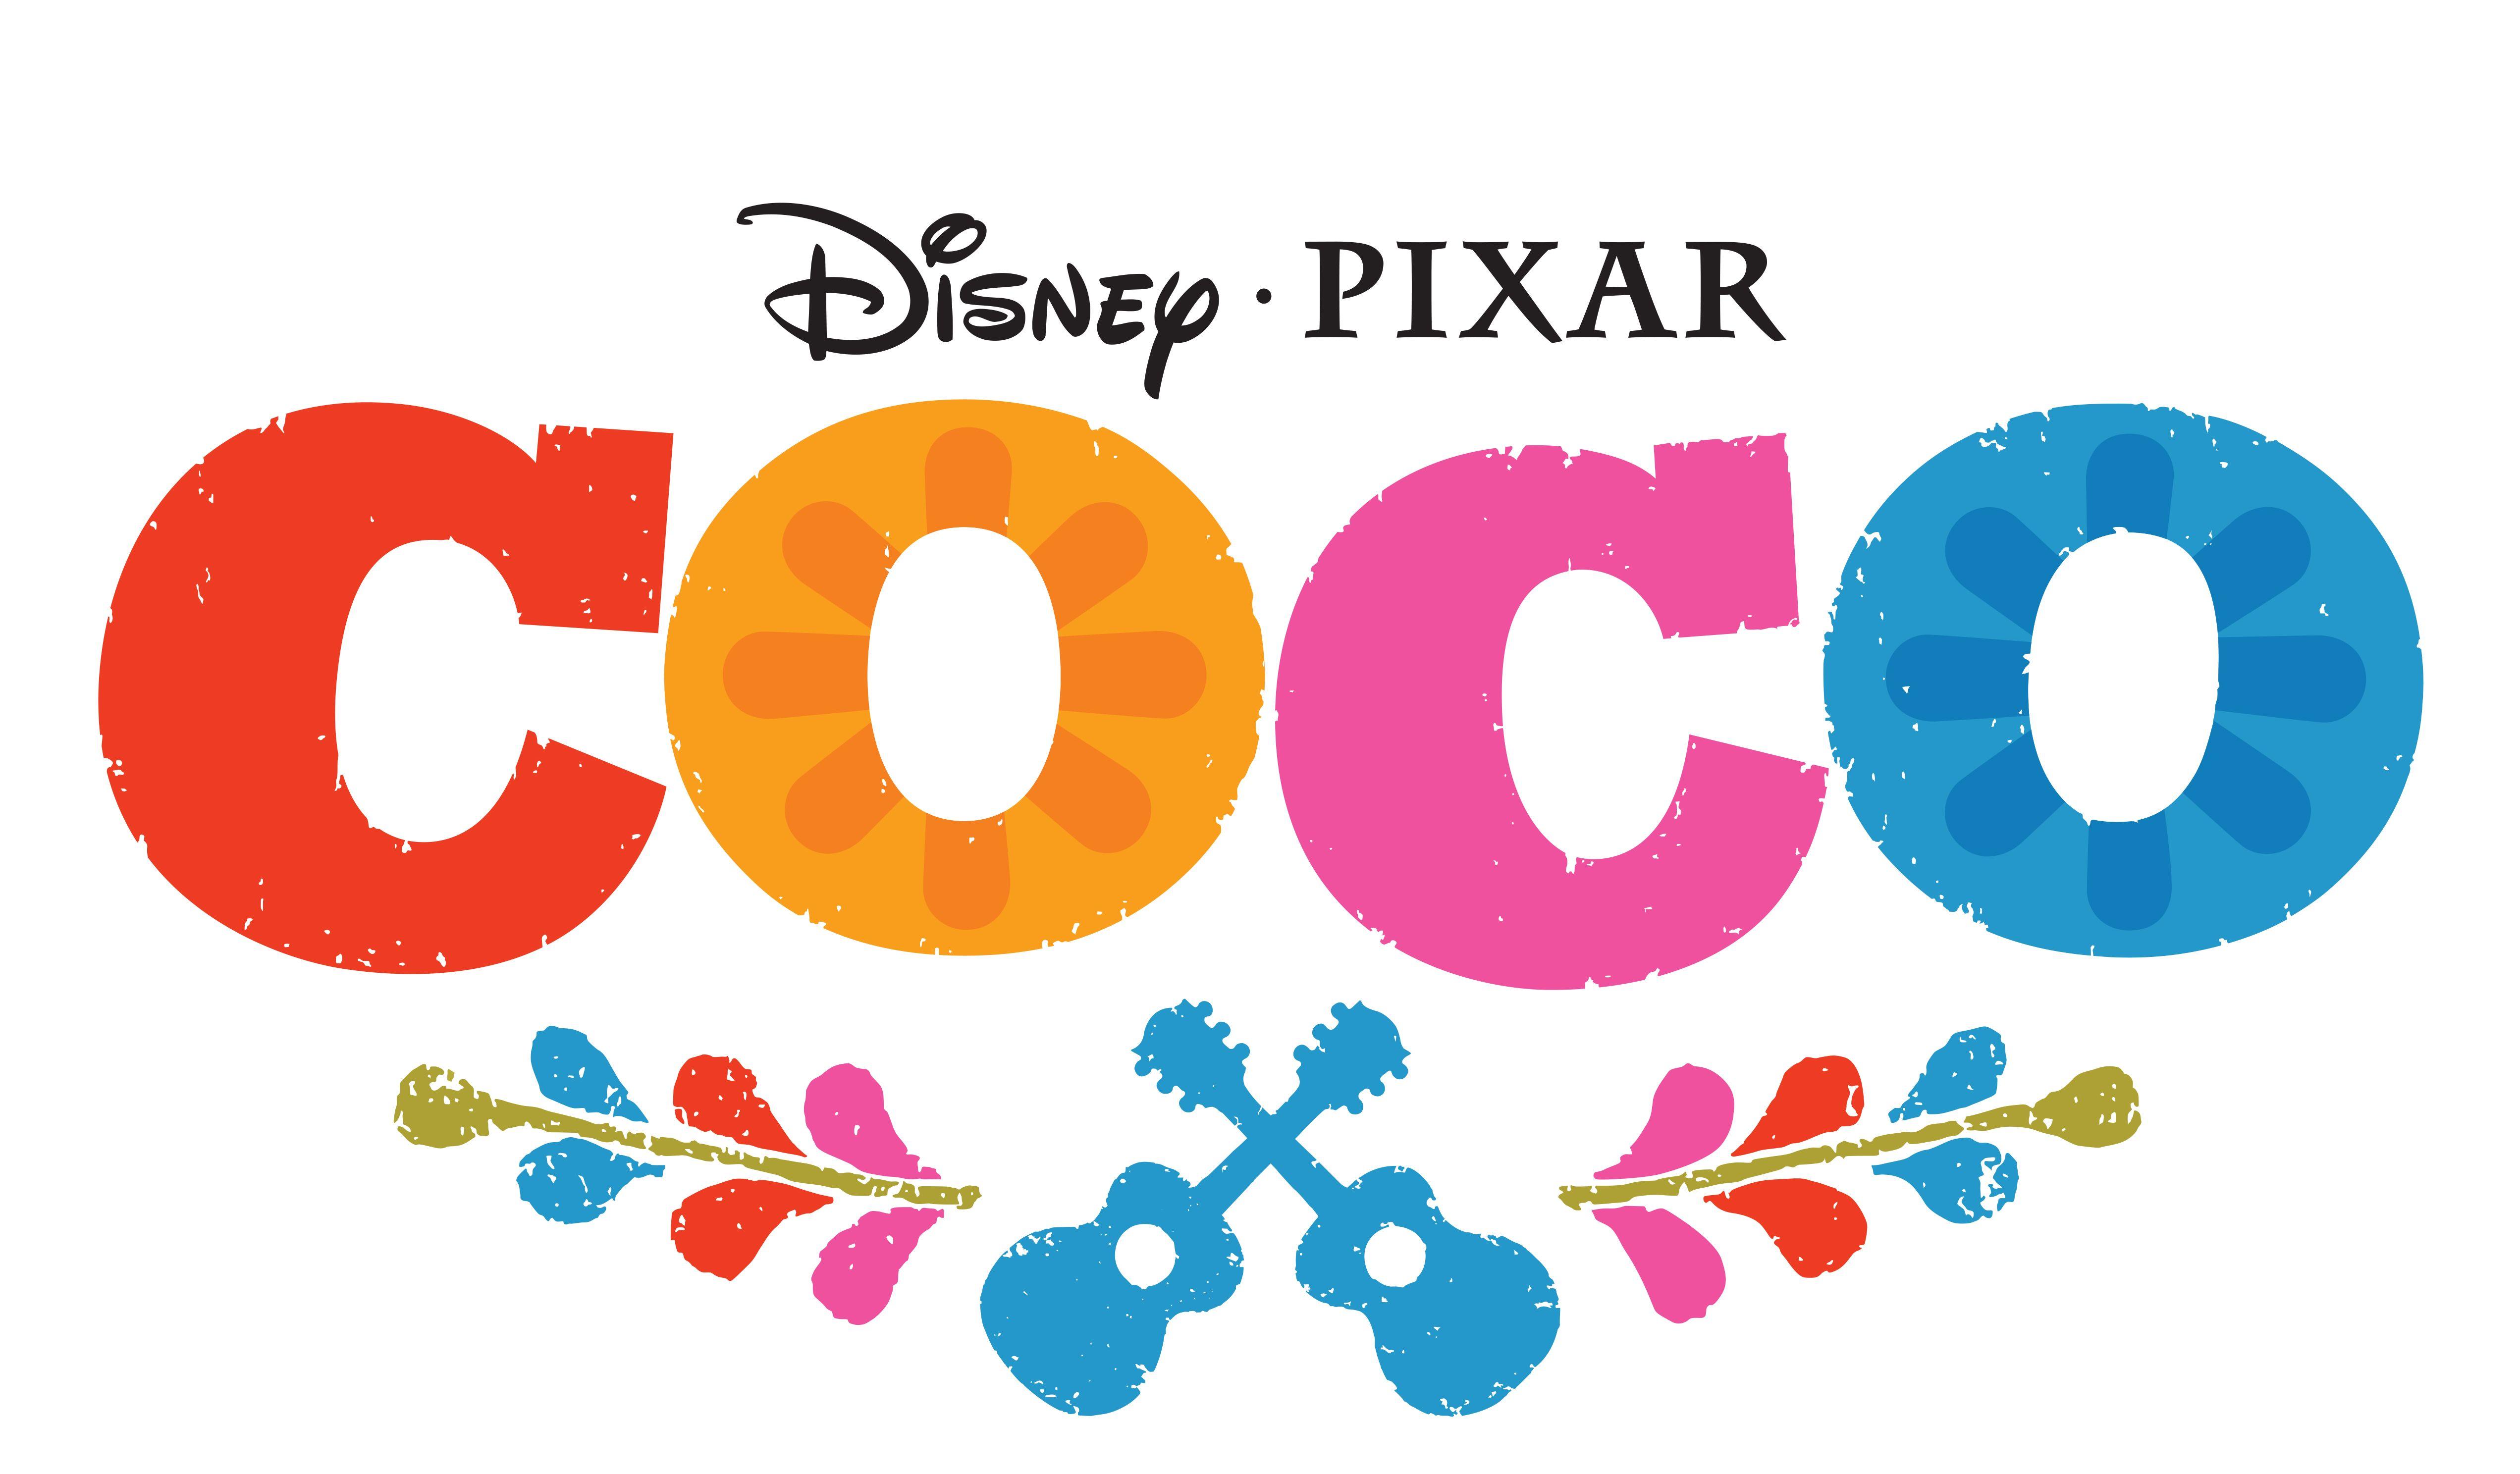 Coco Logo - Coco logo | Catrinas | New disney movies, Pixar movies, Upcoming ...